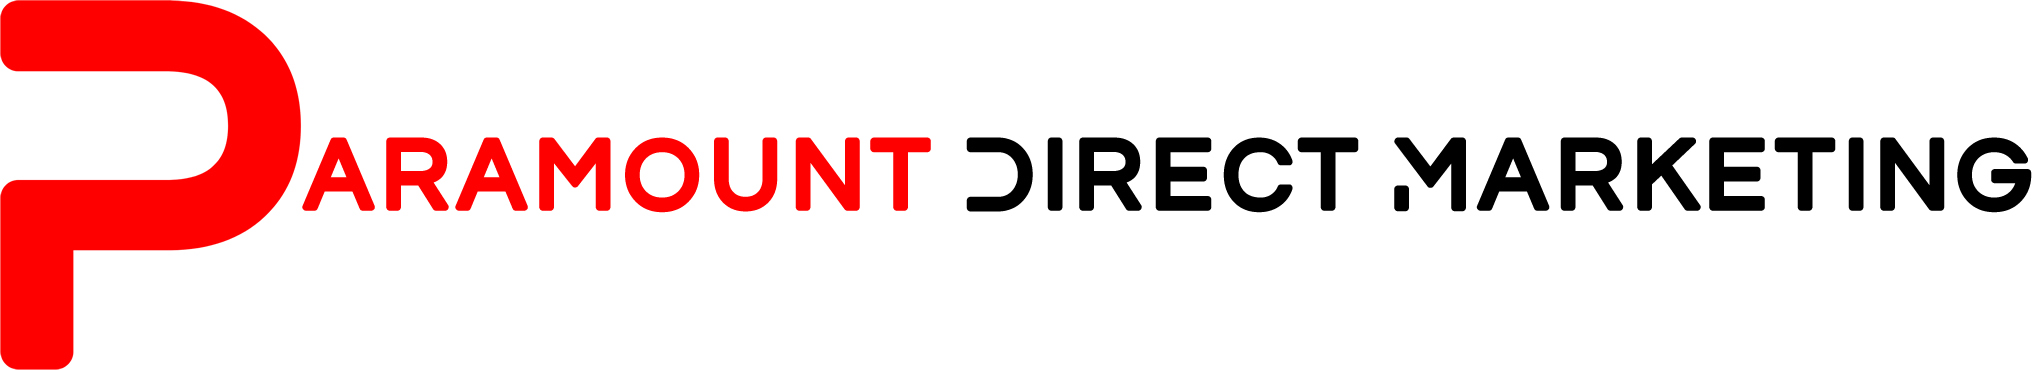 Paramount Direct Marketing Logo